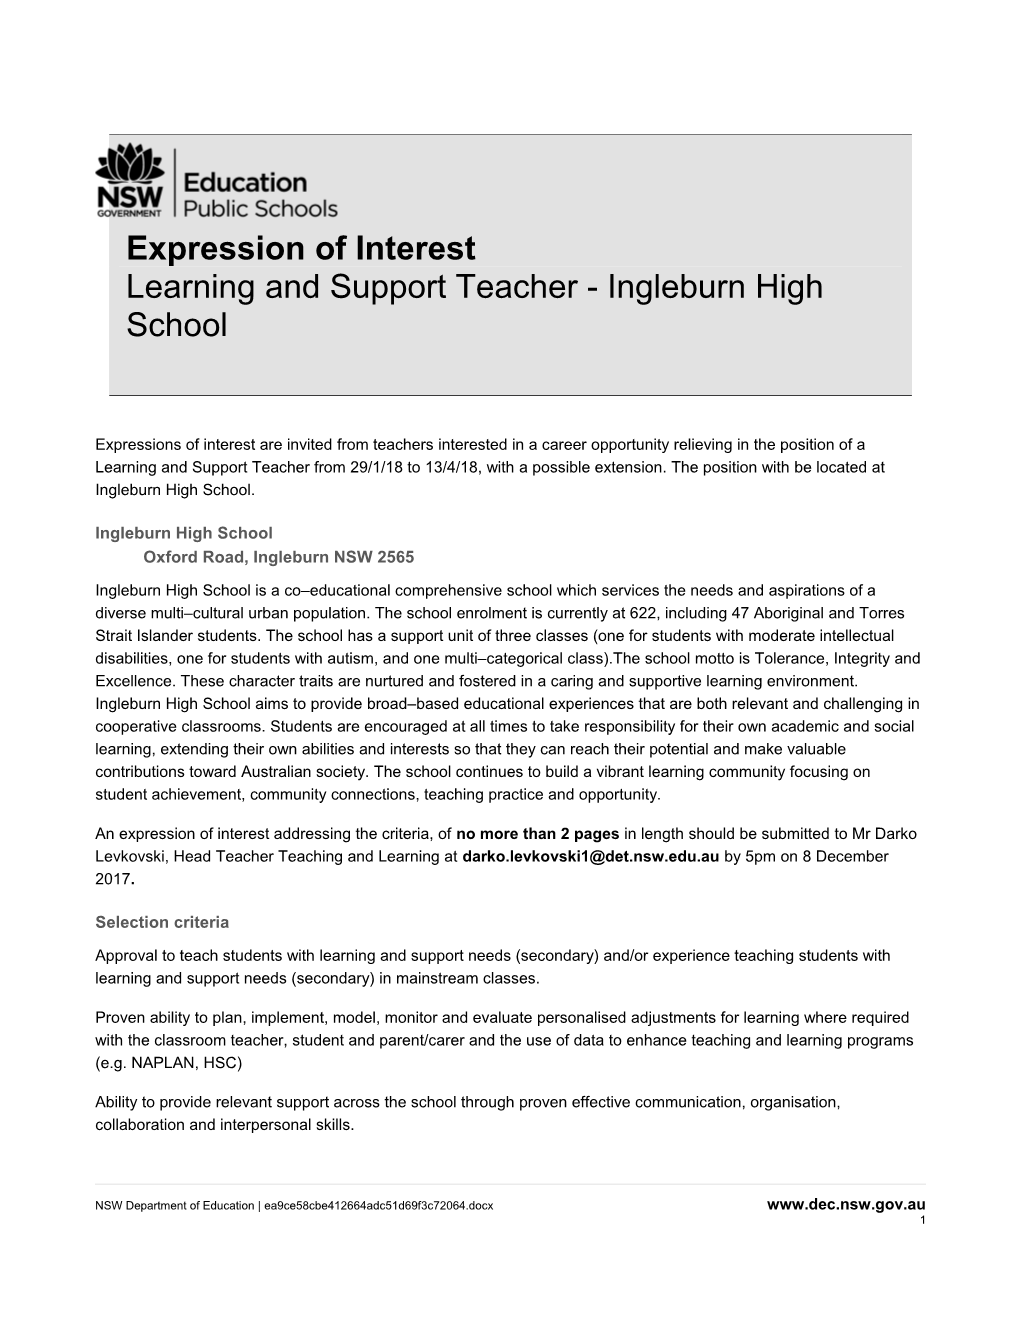 Learning and Support Teacher - Ingleburn High School